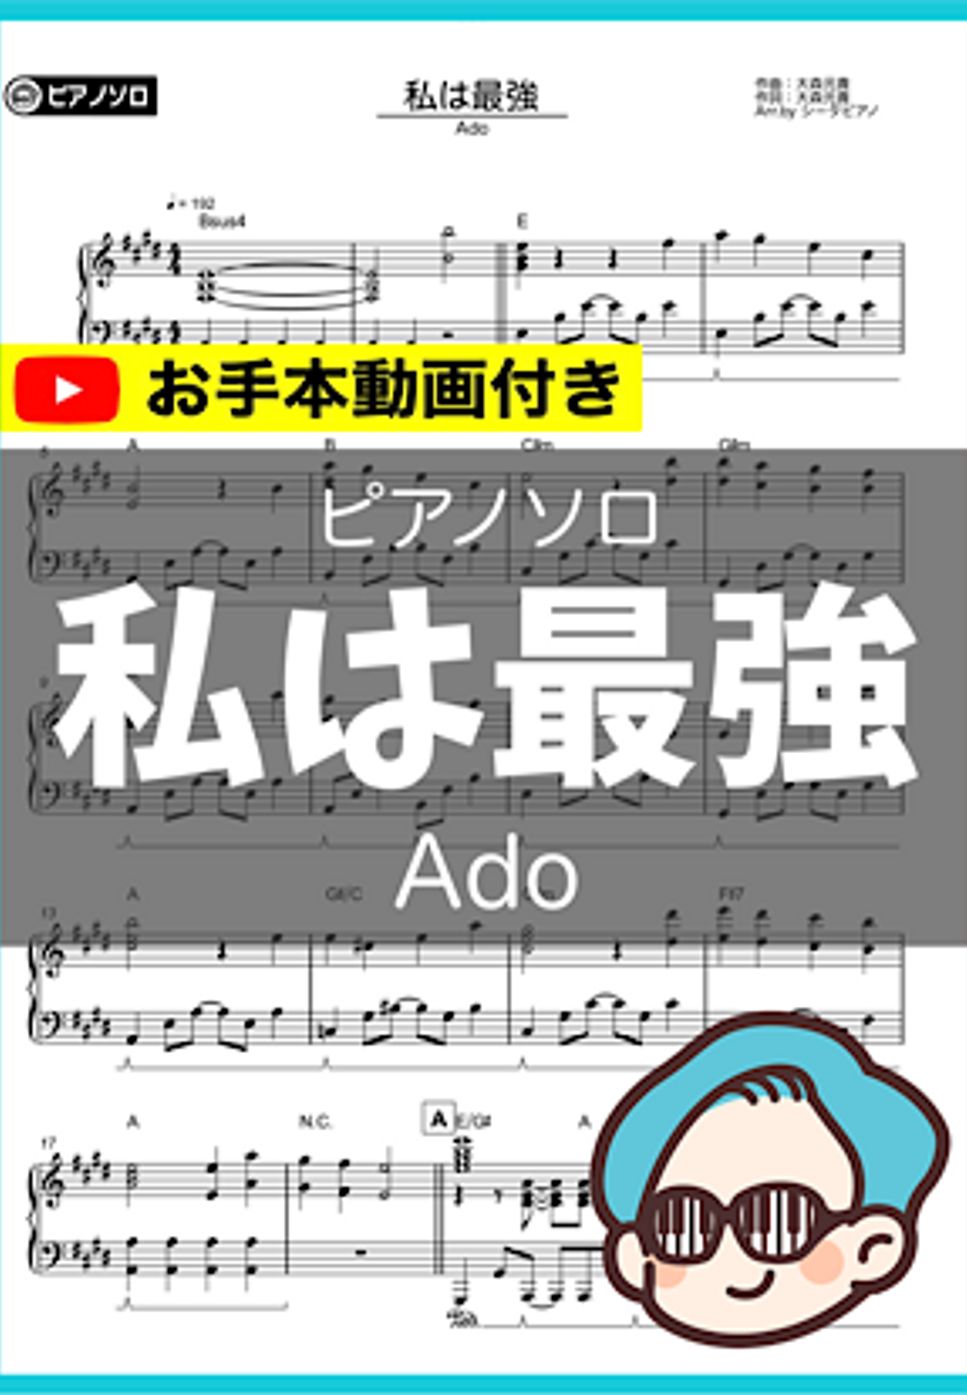 Ado - 私は最強 by シータピアノ